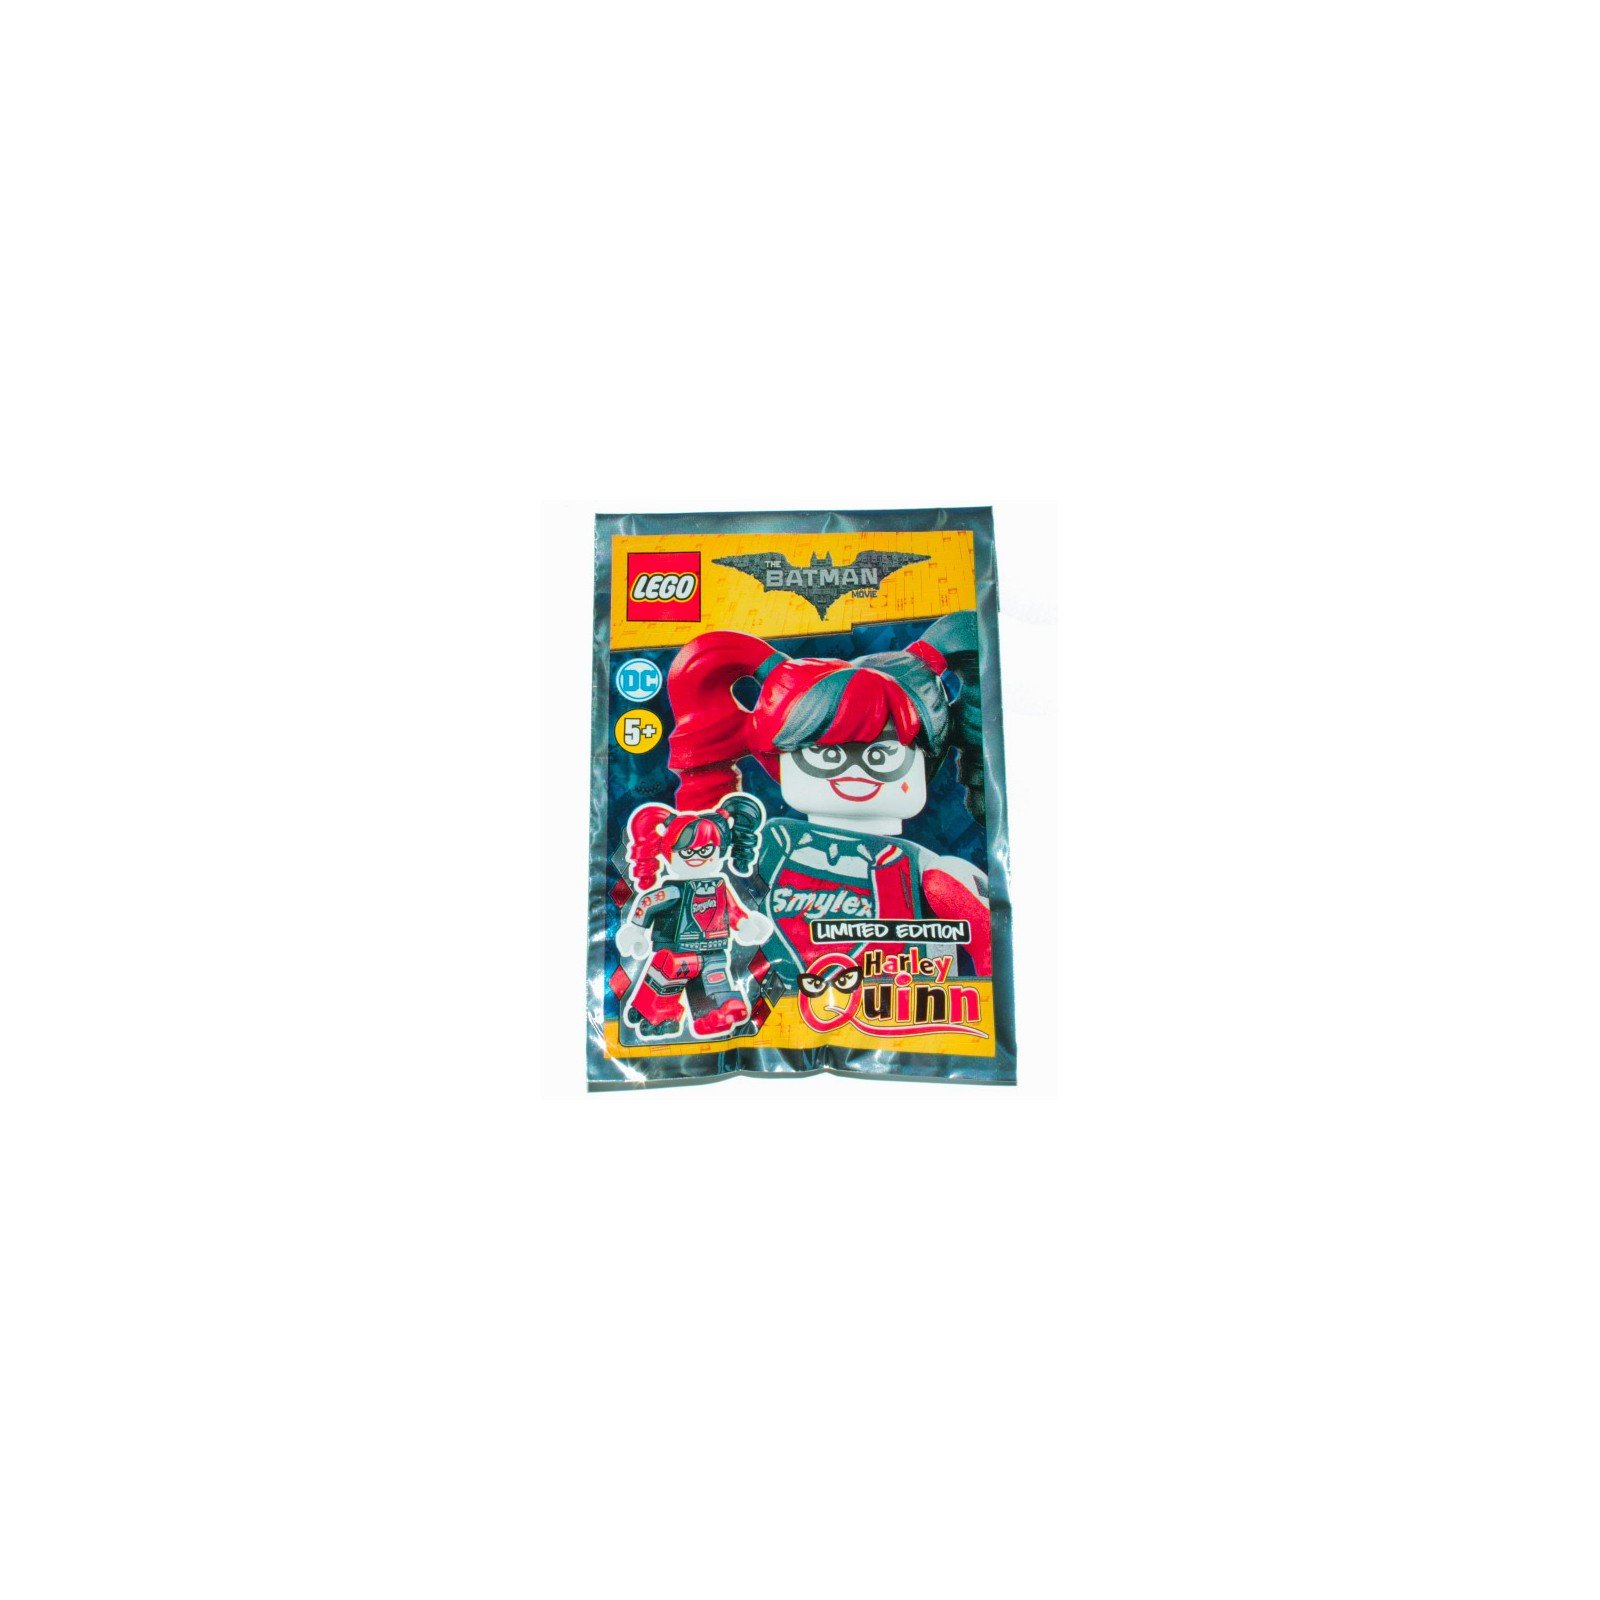 Harley Quinn (Edition limitée) - Polybag LEGO® DC Comics 211804